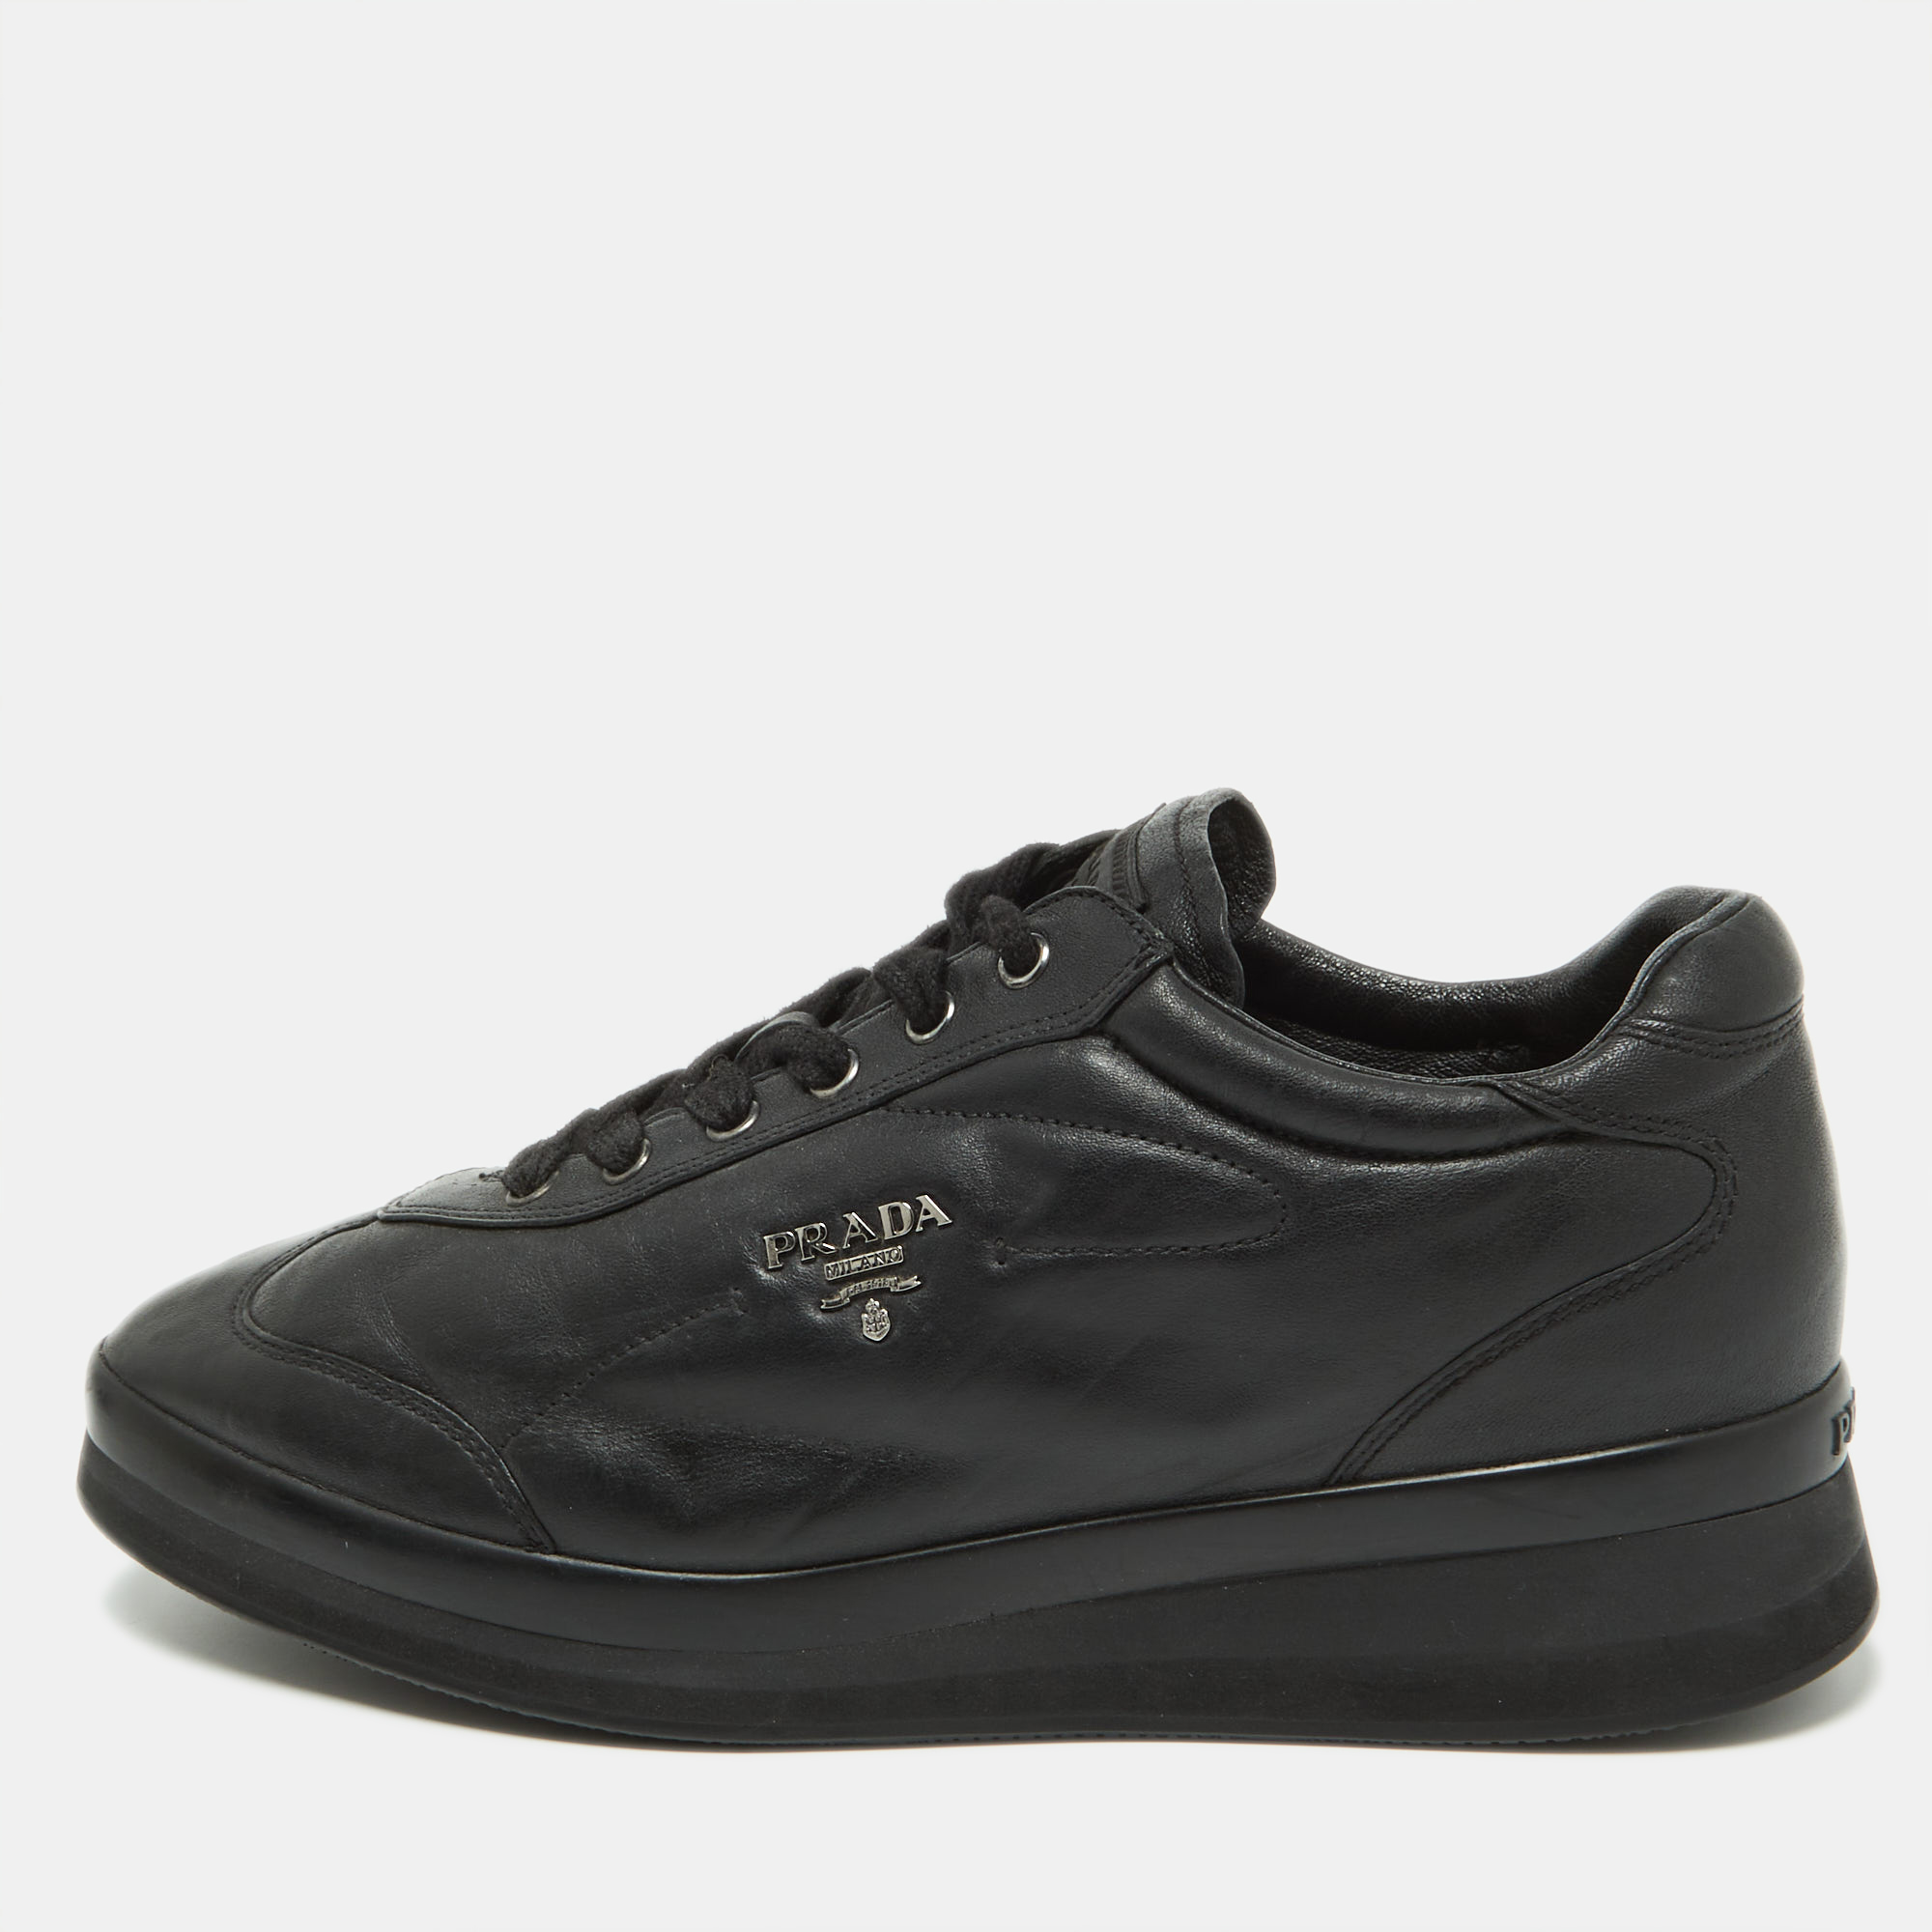 Prada black leather low top sneakers size 40.5